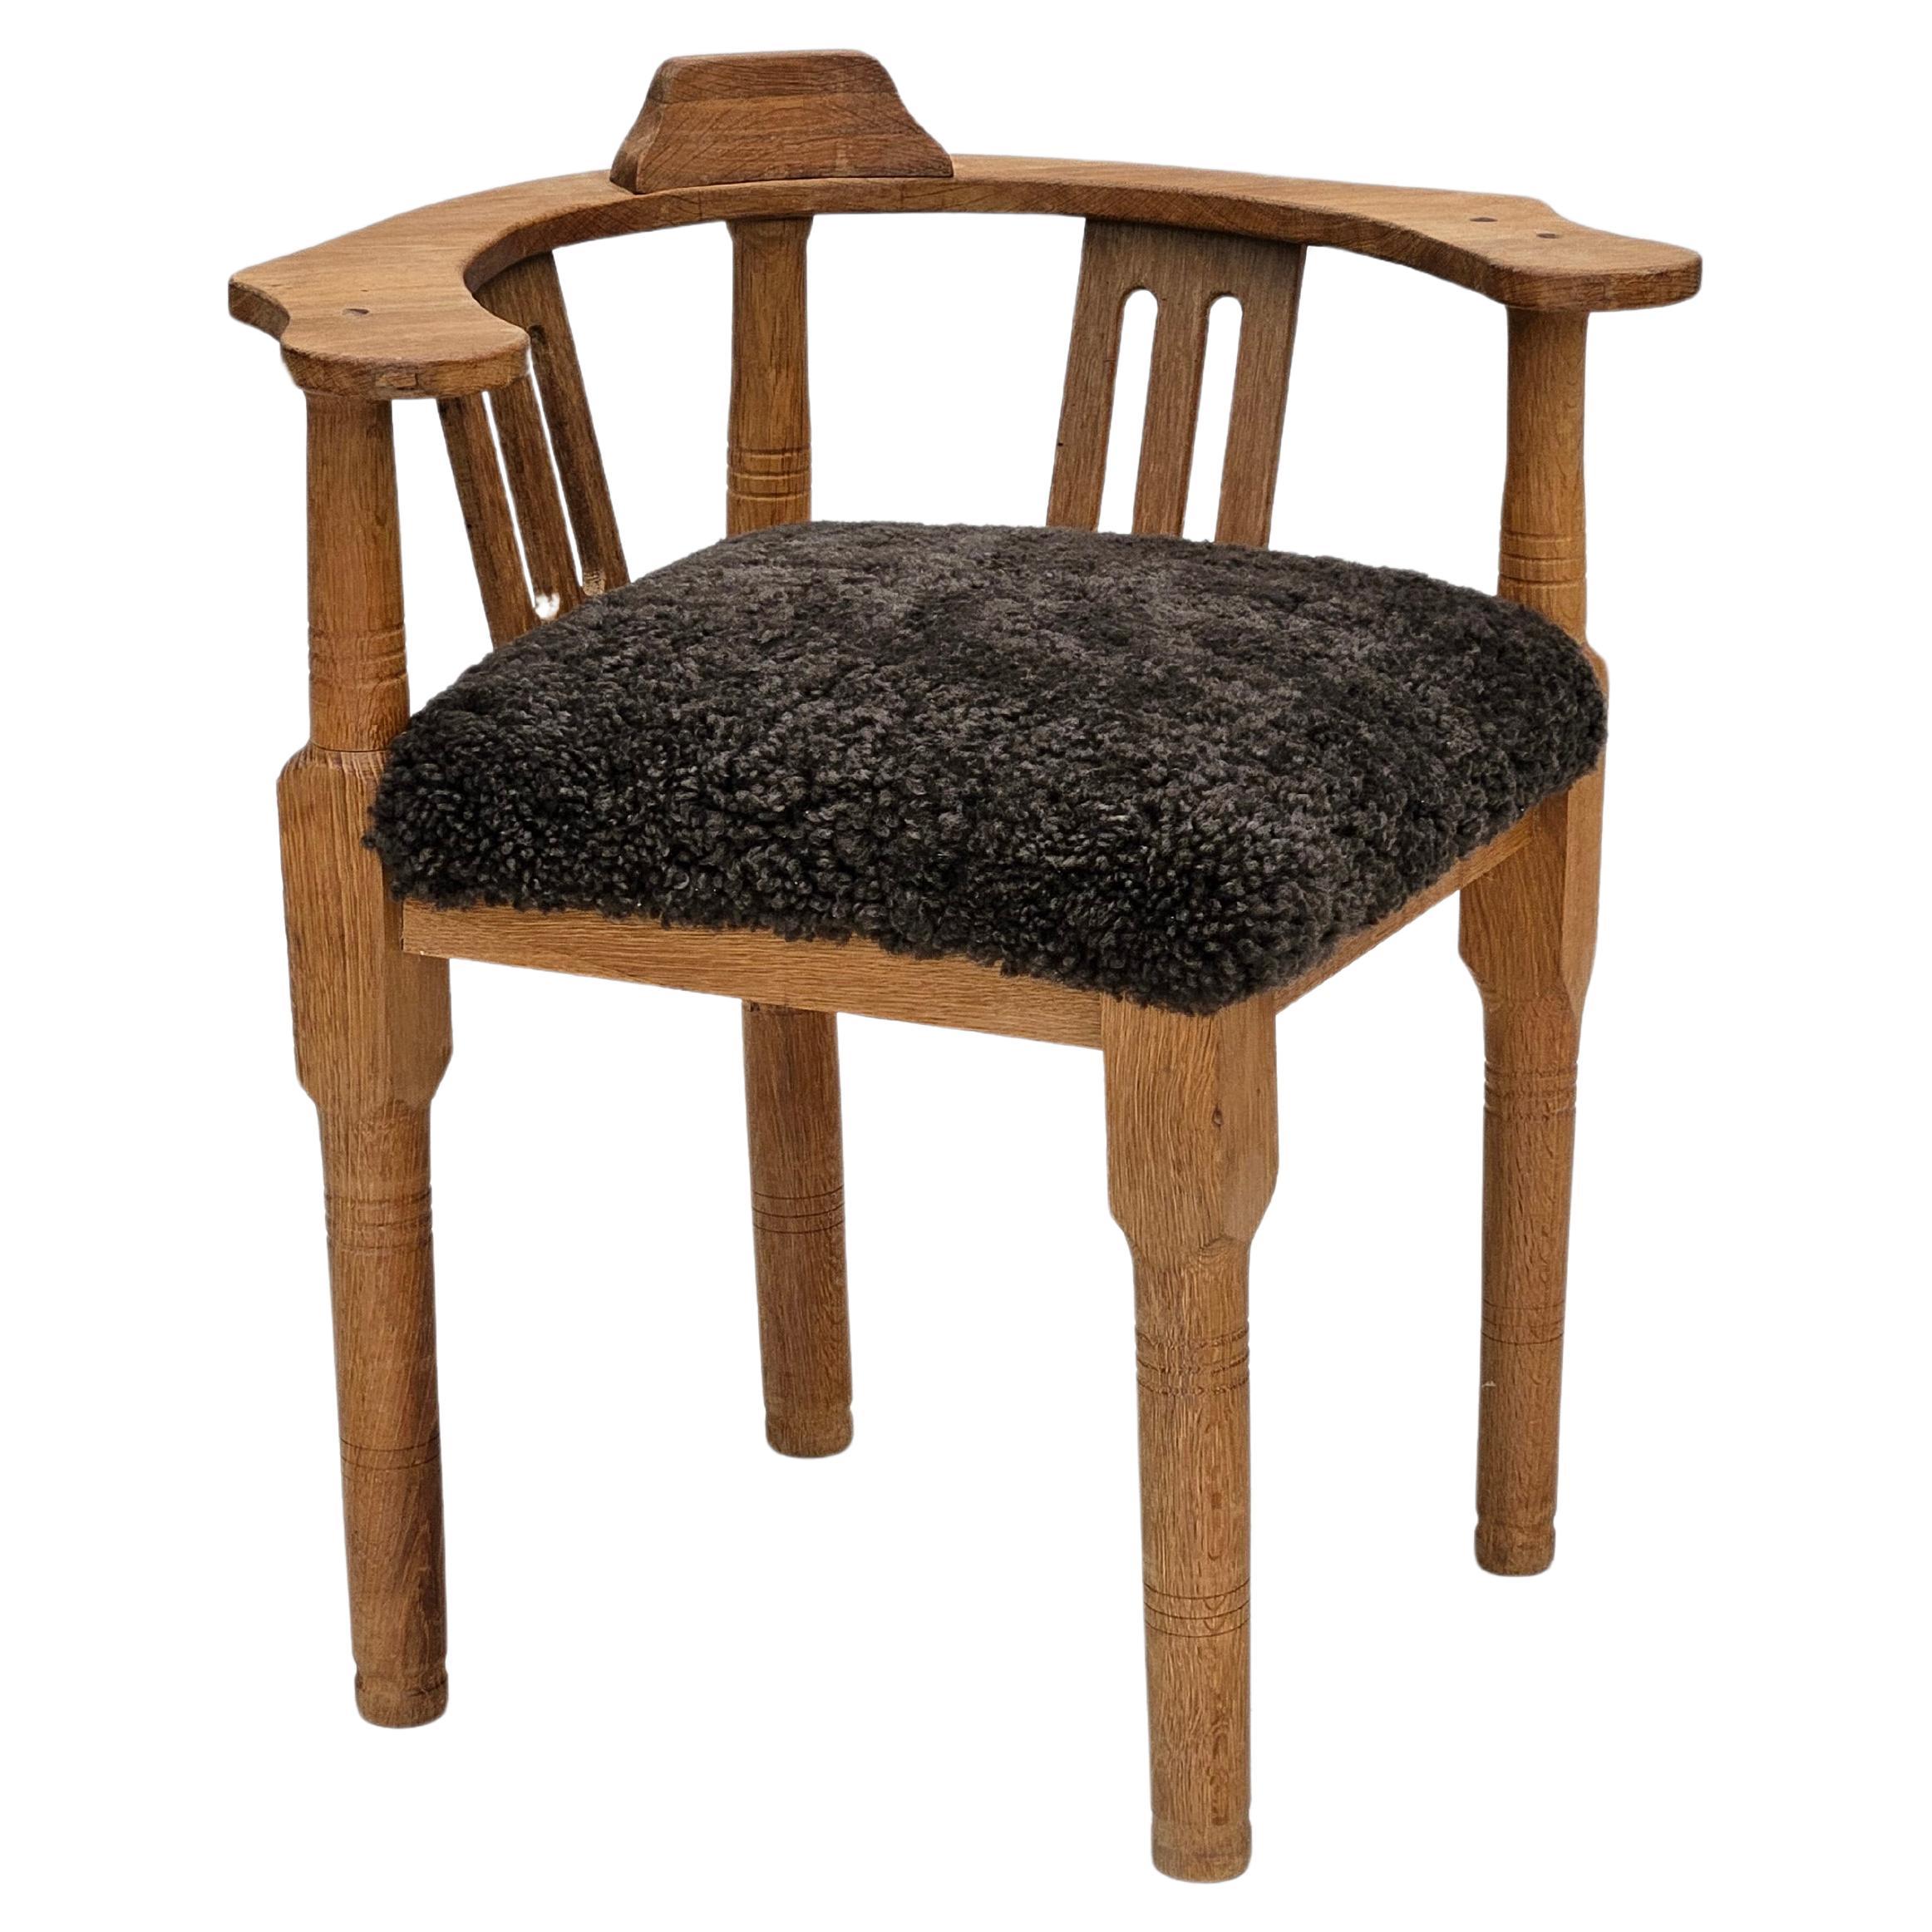 1950s, Danish design, reupholstered armchair, New Zealand sheepskin, oak wood.